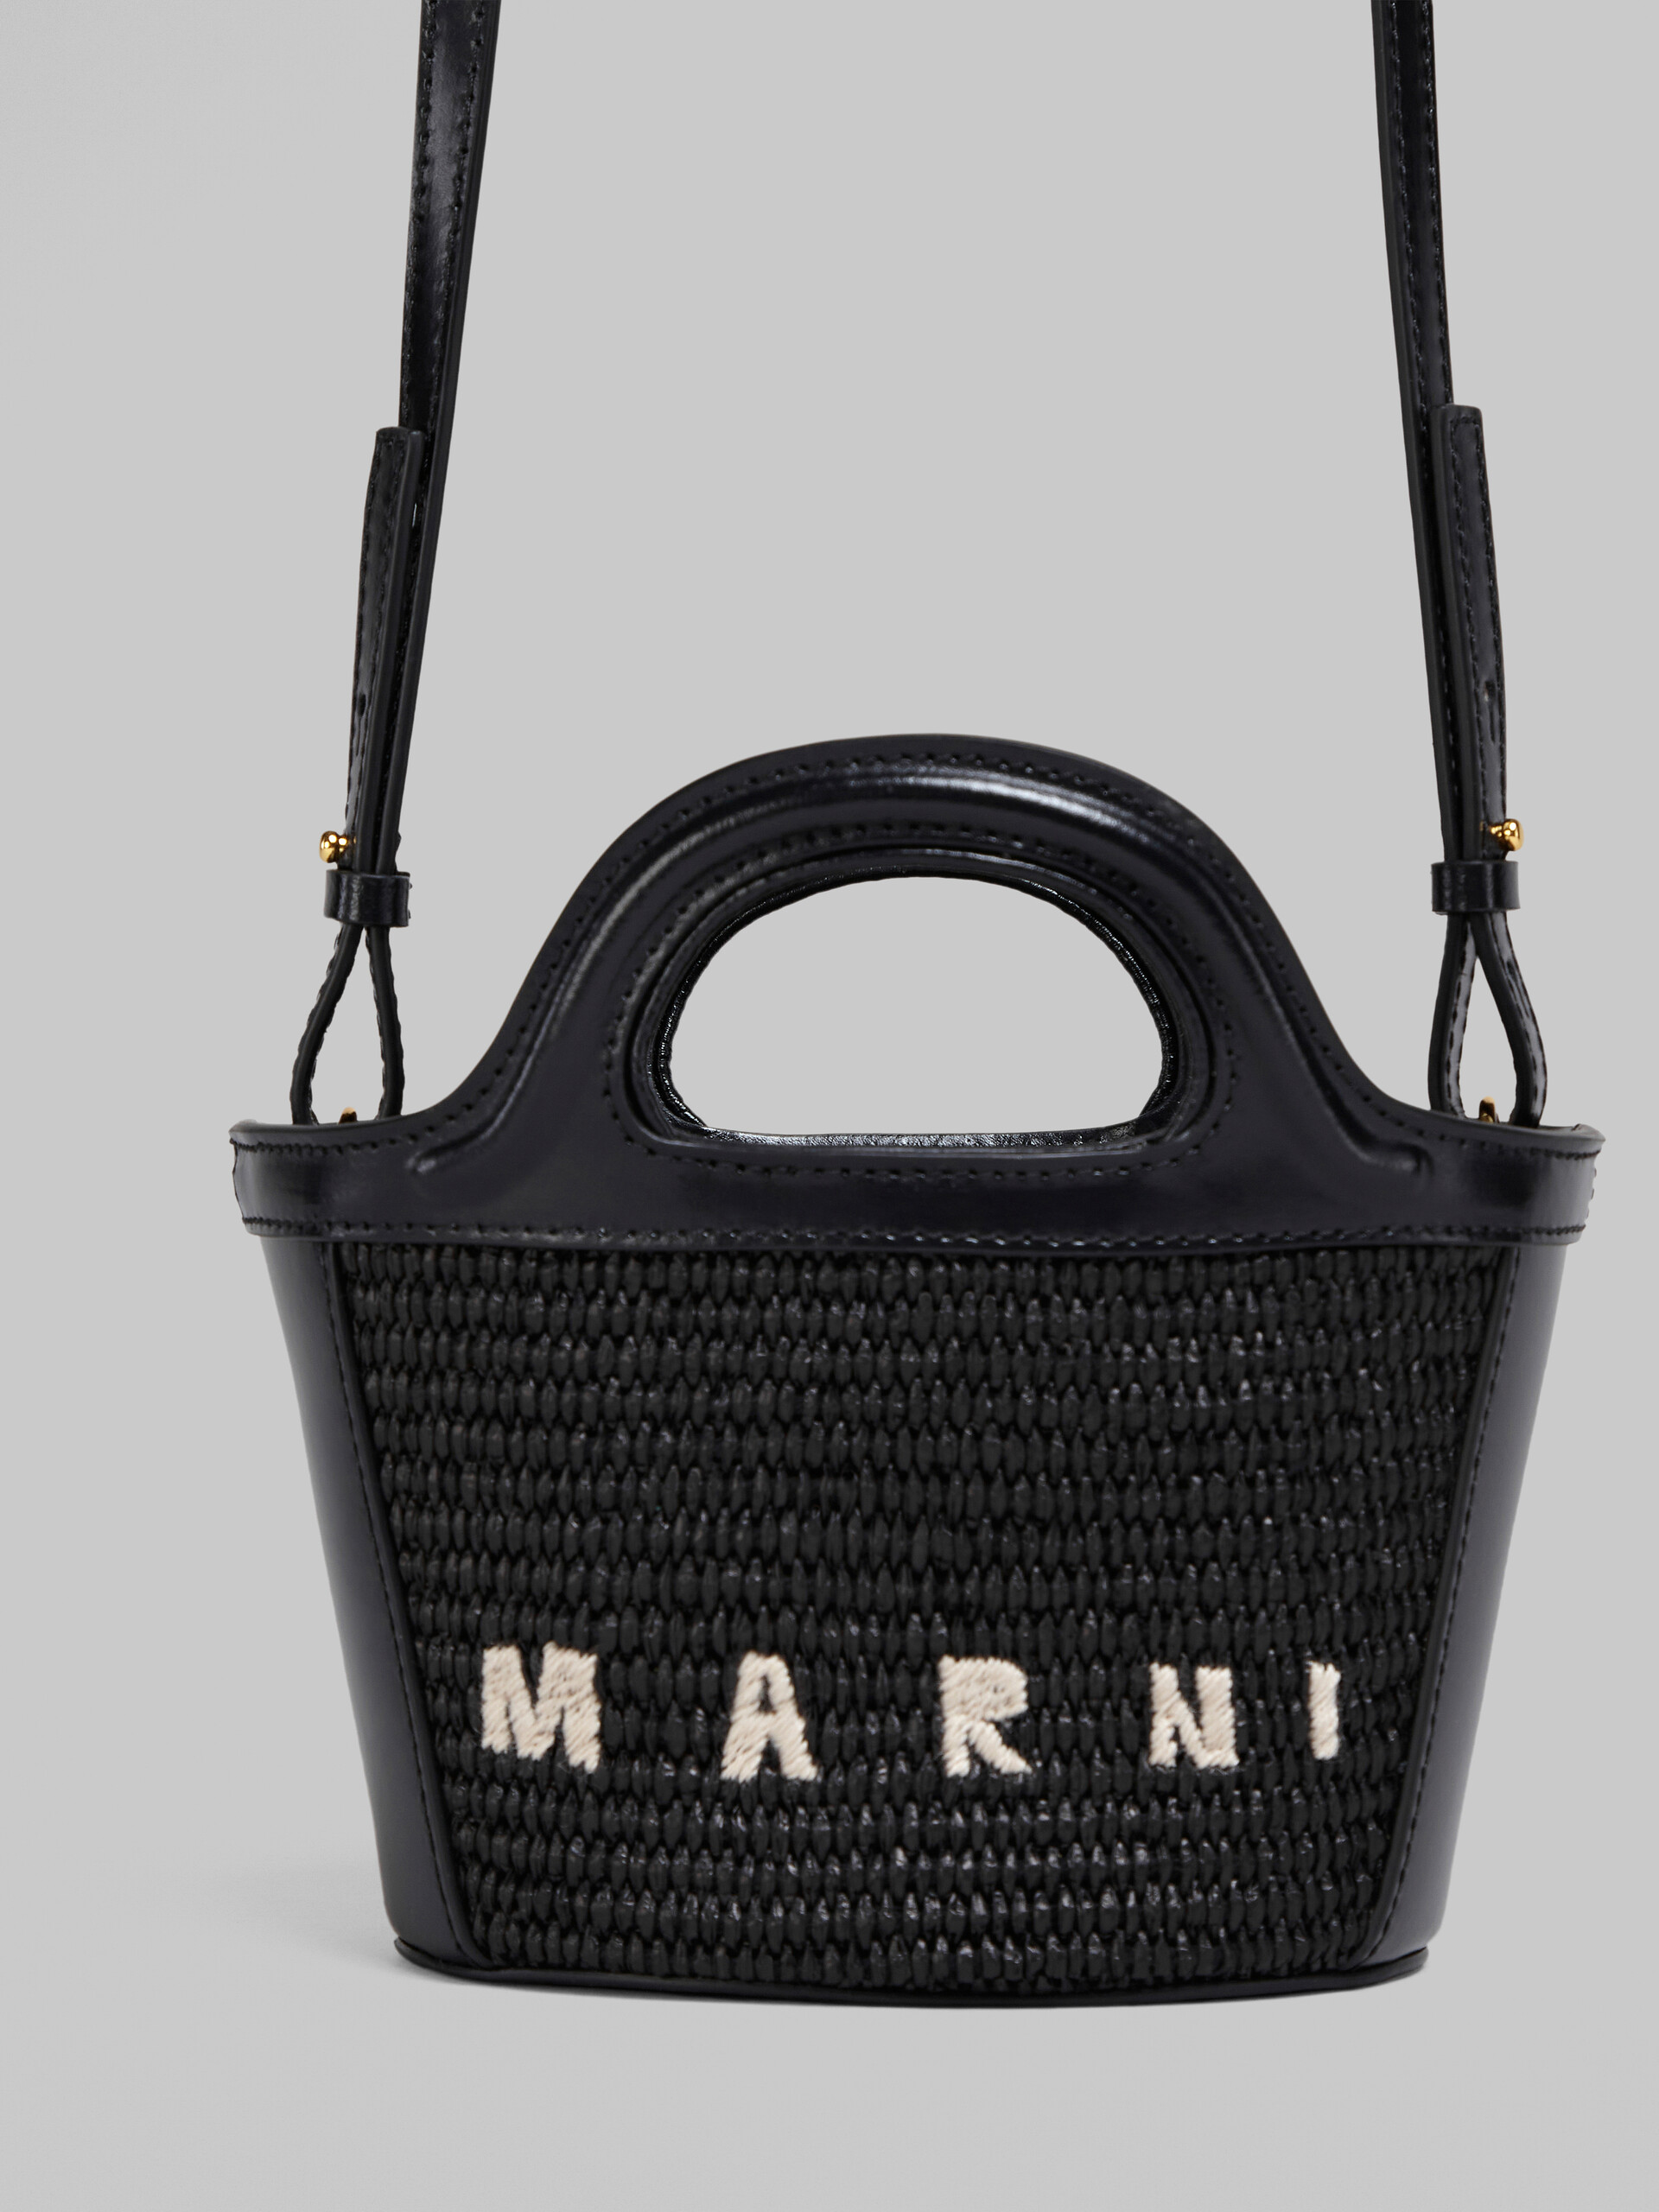 TROPICALIA micro bag in black leather and raffia - Handbags - Image 5